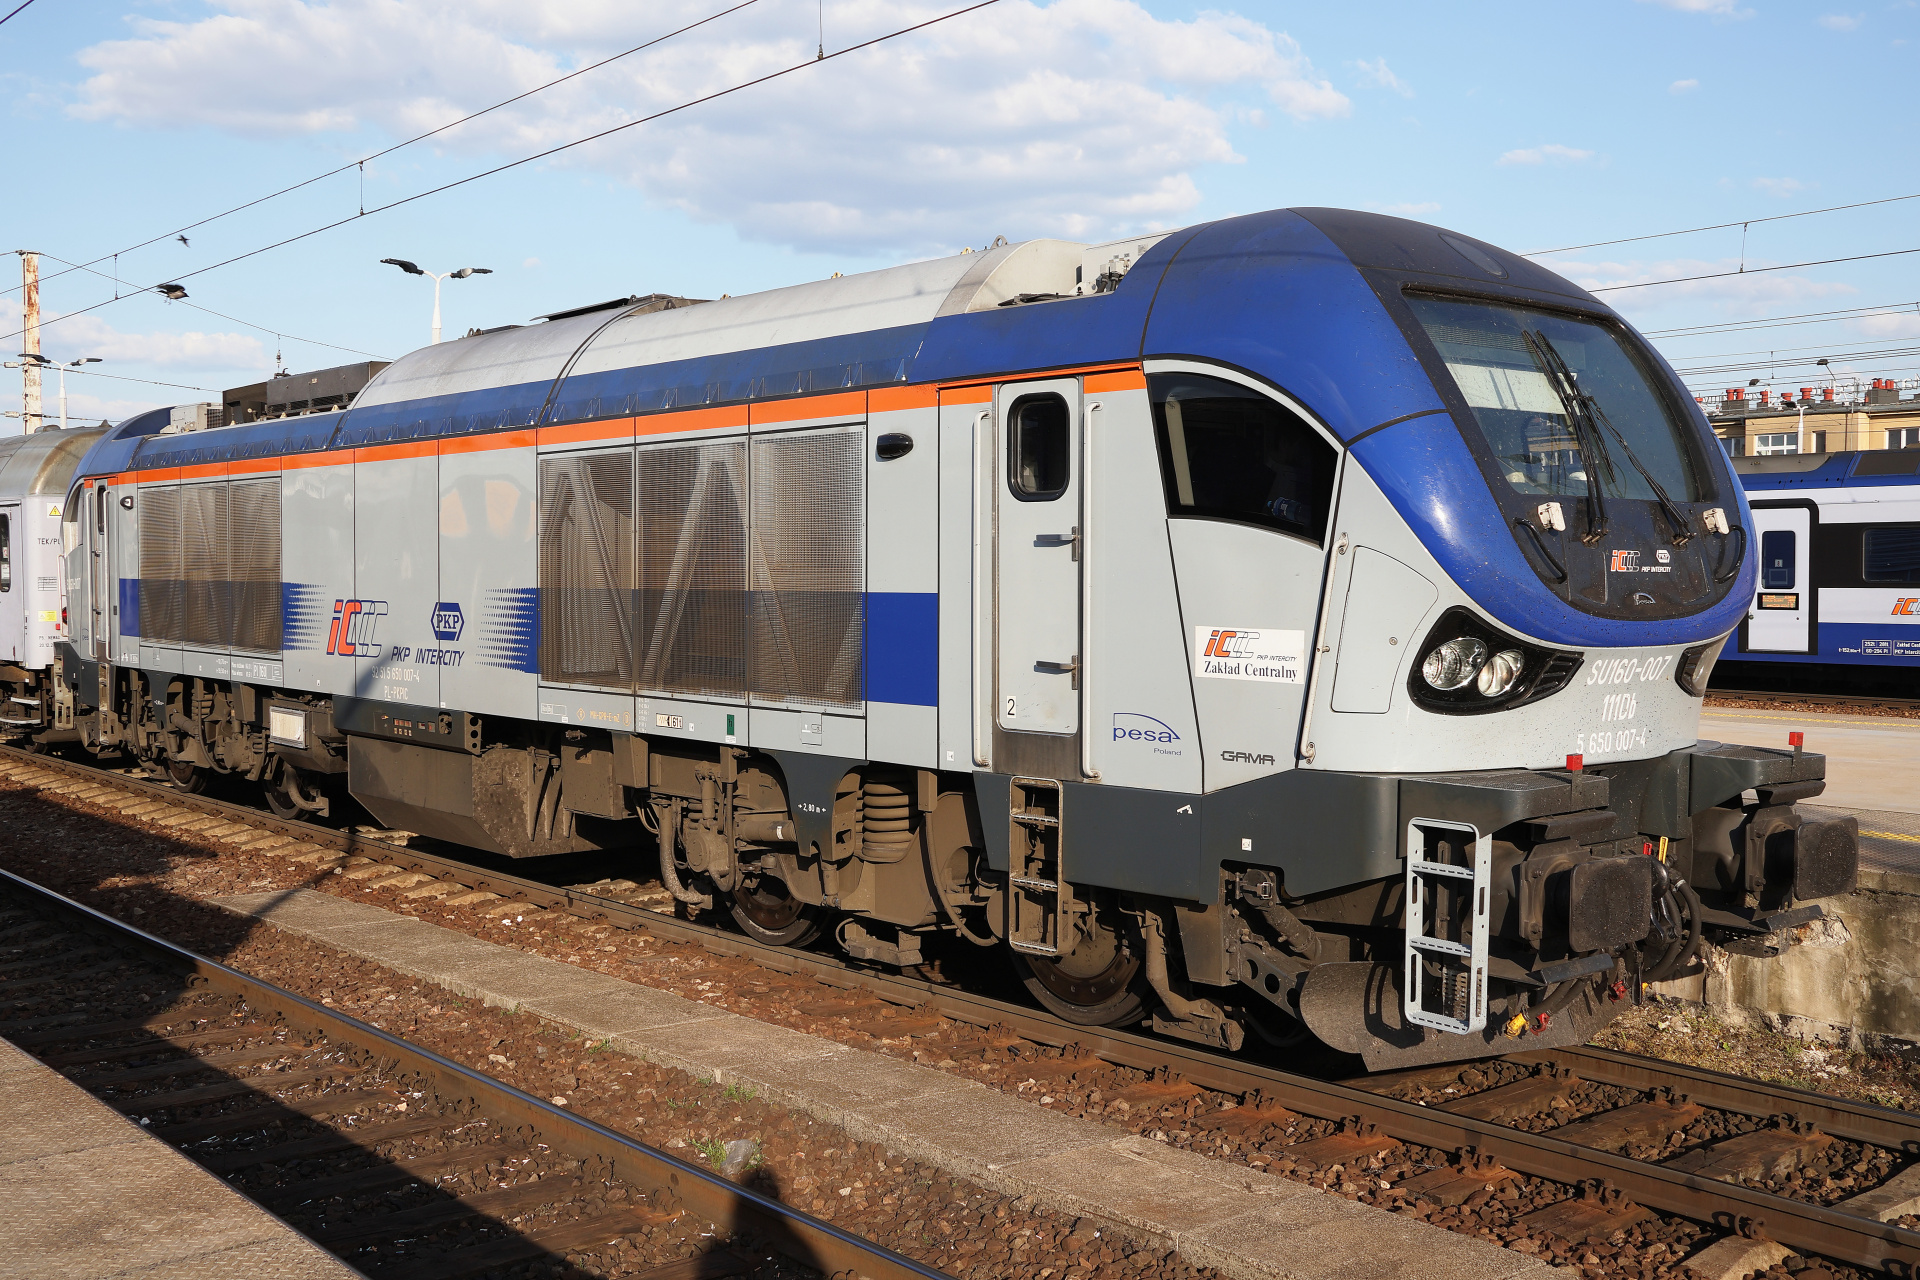 111Db SU160-007 (Vehicles » Trains and Locomotives » Pesa Gama)